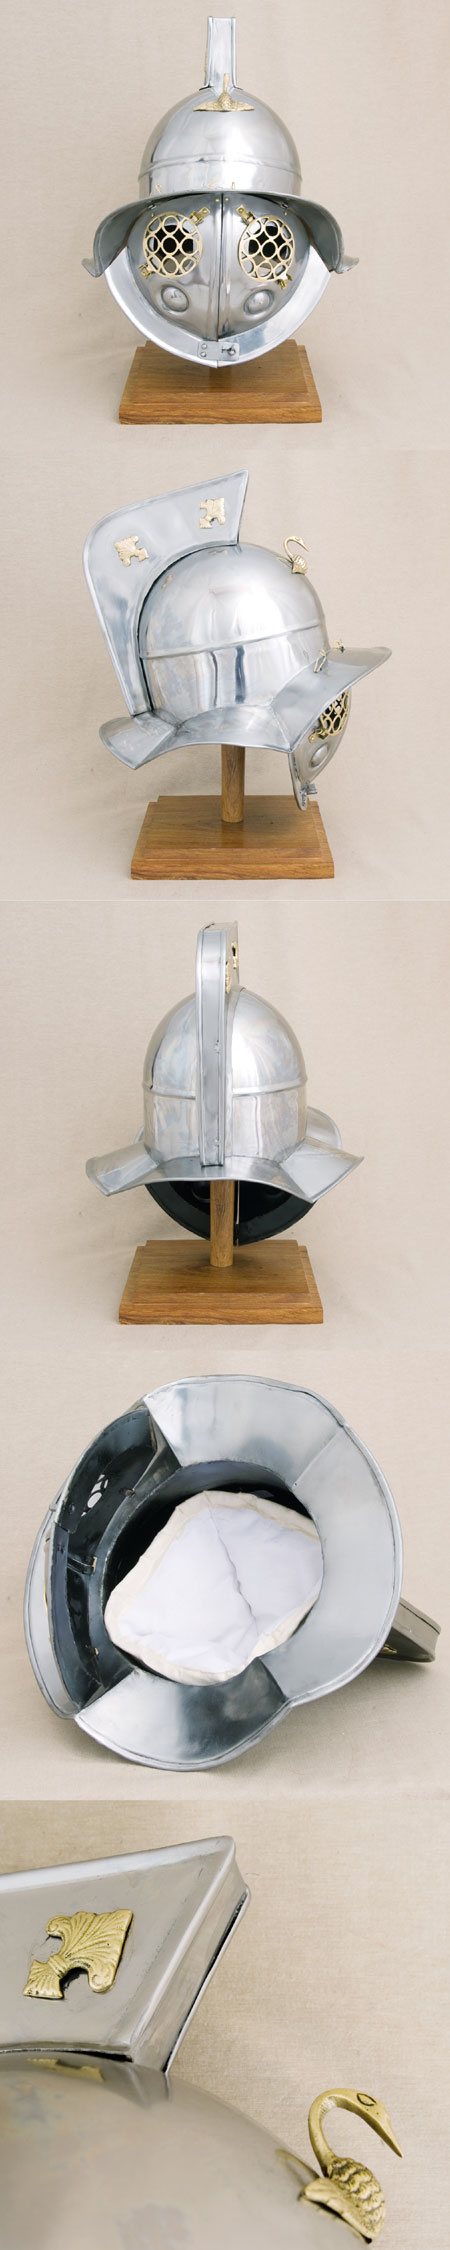 Roman Gladiator helmet, as from Pompeii 79 AD